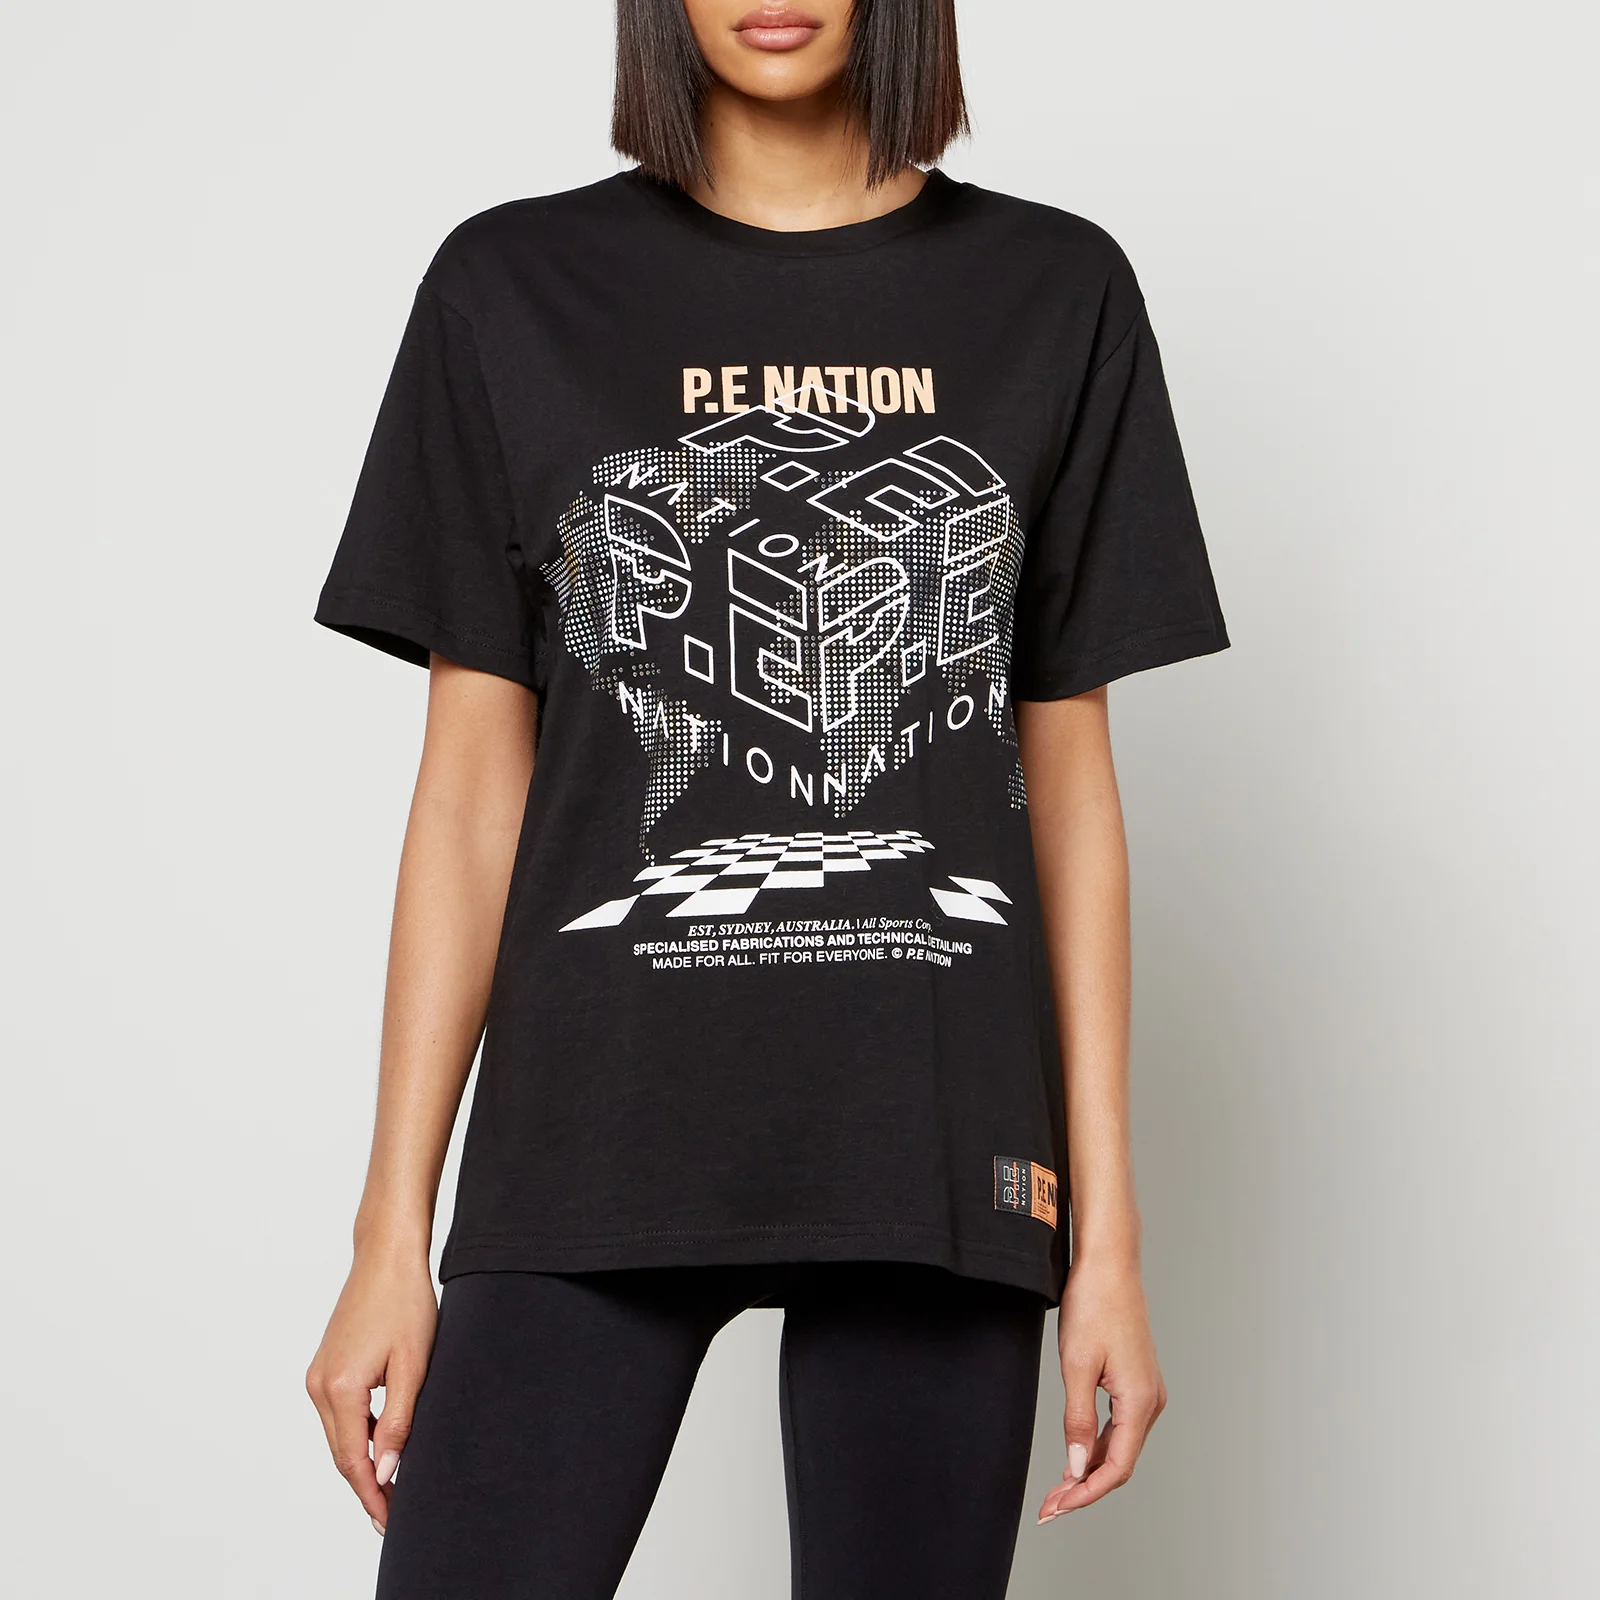 P.E Nation Women's Progression Organic Cotton-Jersey T-Shirt - Black Image 1